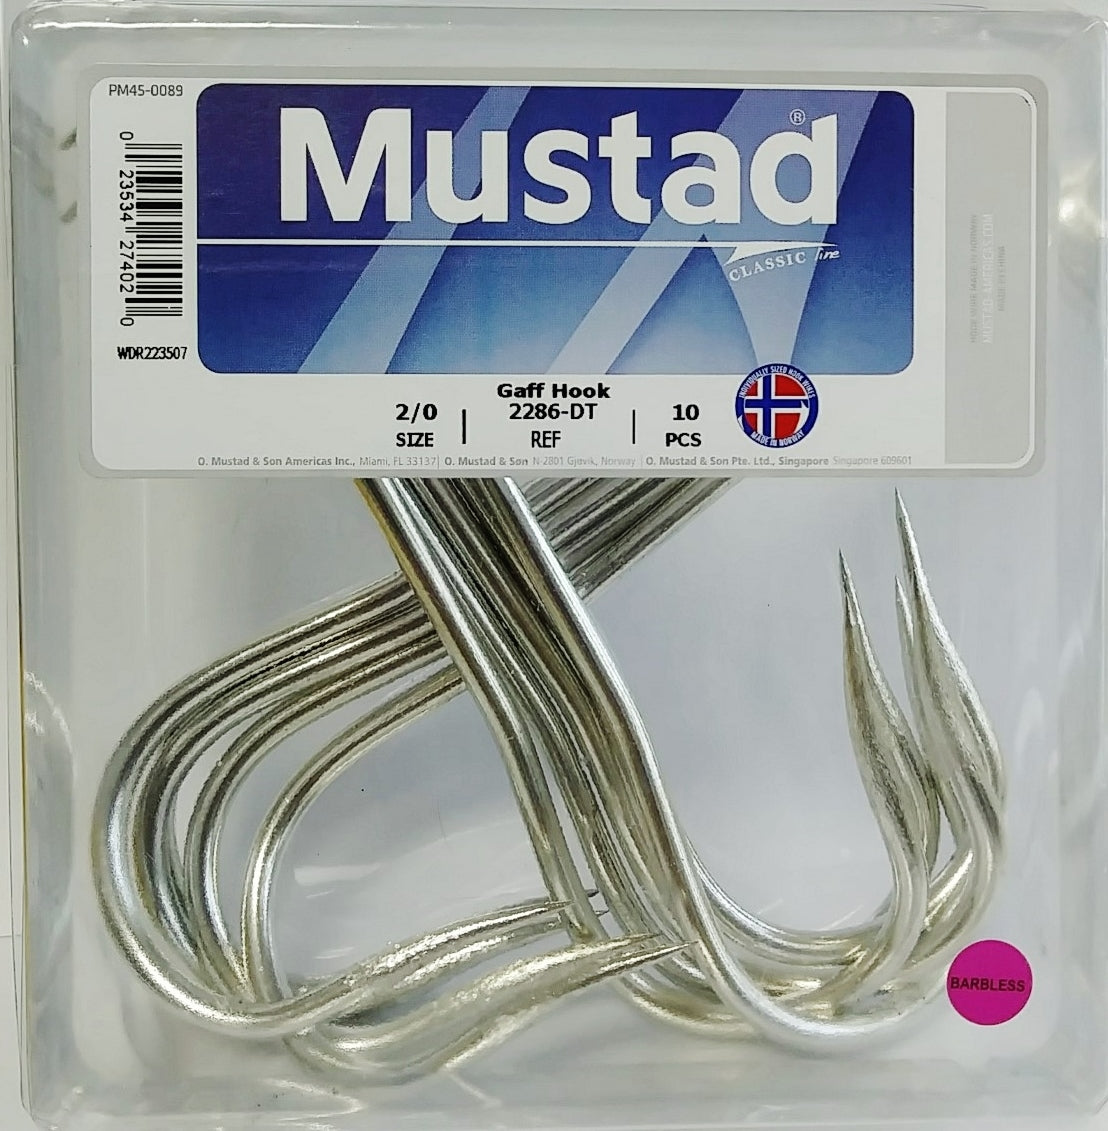 100 Mustad 37160 2X Nickel Kahle Fish Hooks size 2/0 - 100 hooks